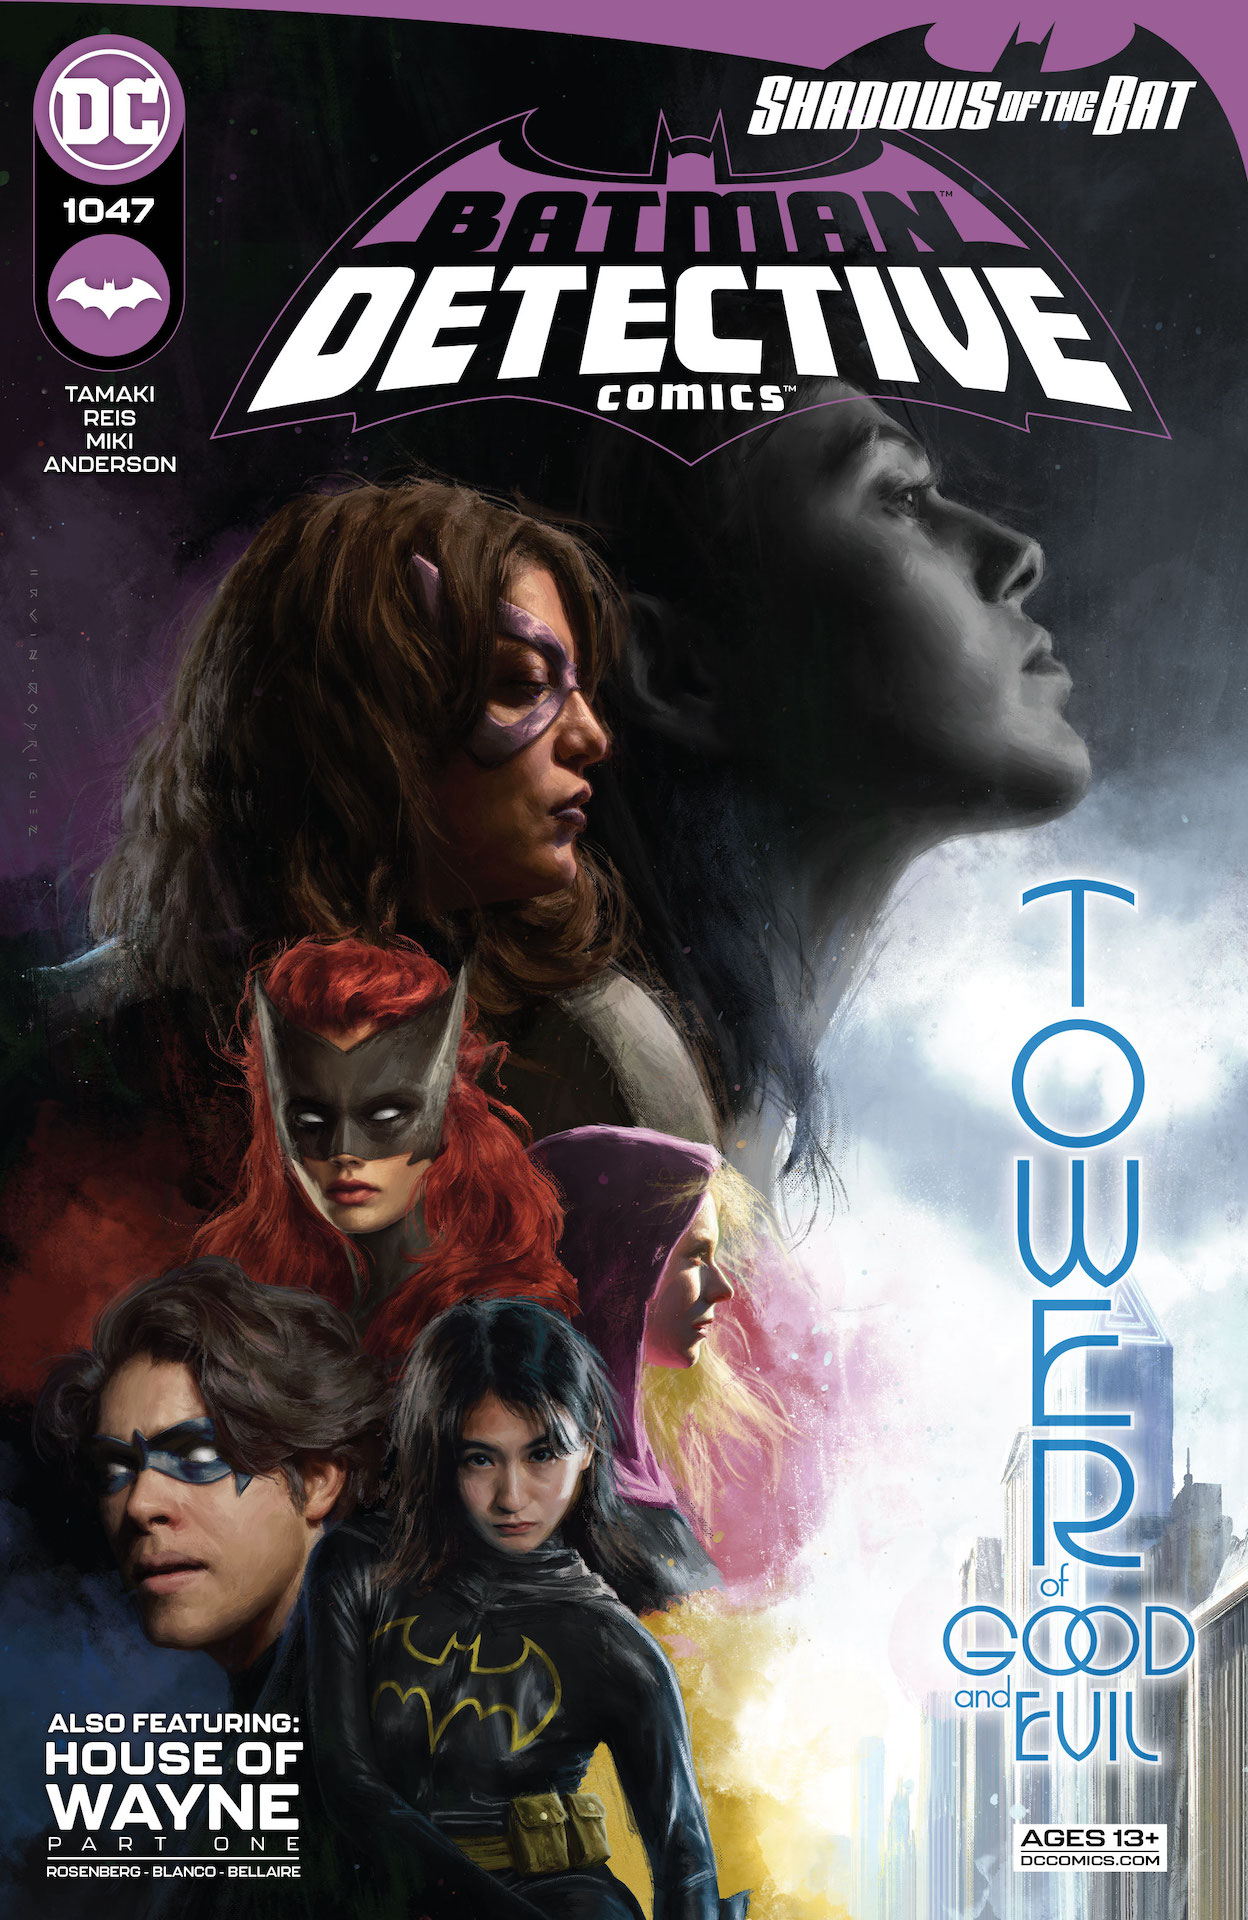 DC Preview: Detective Comics #1047